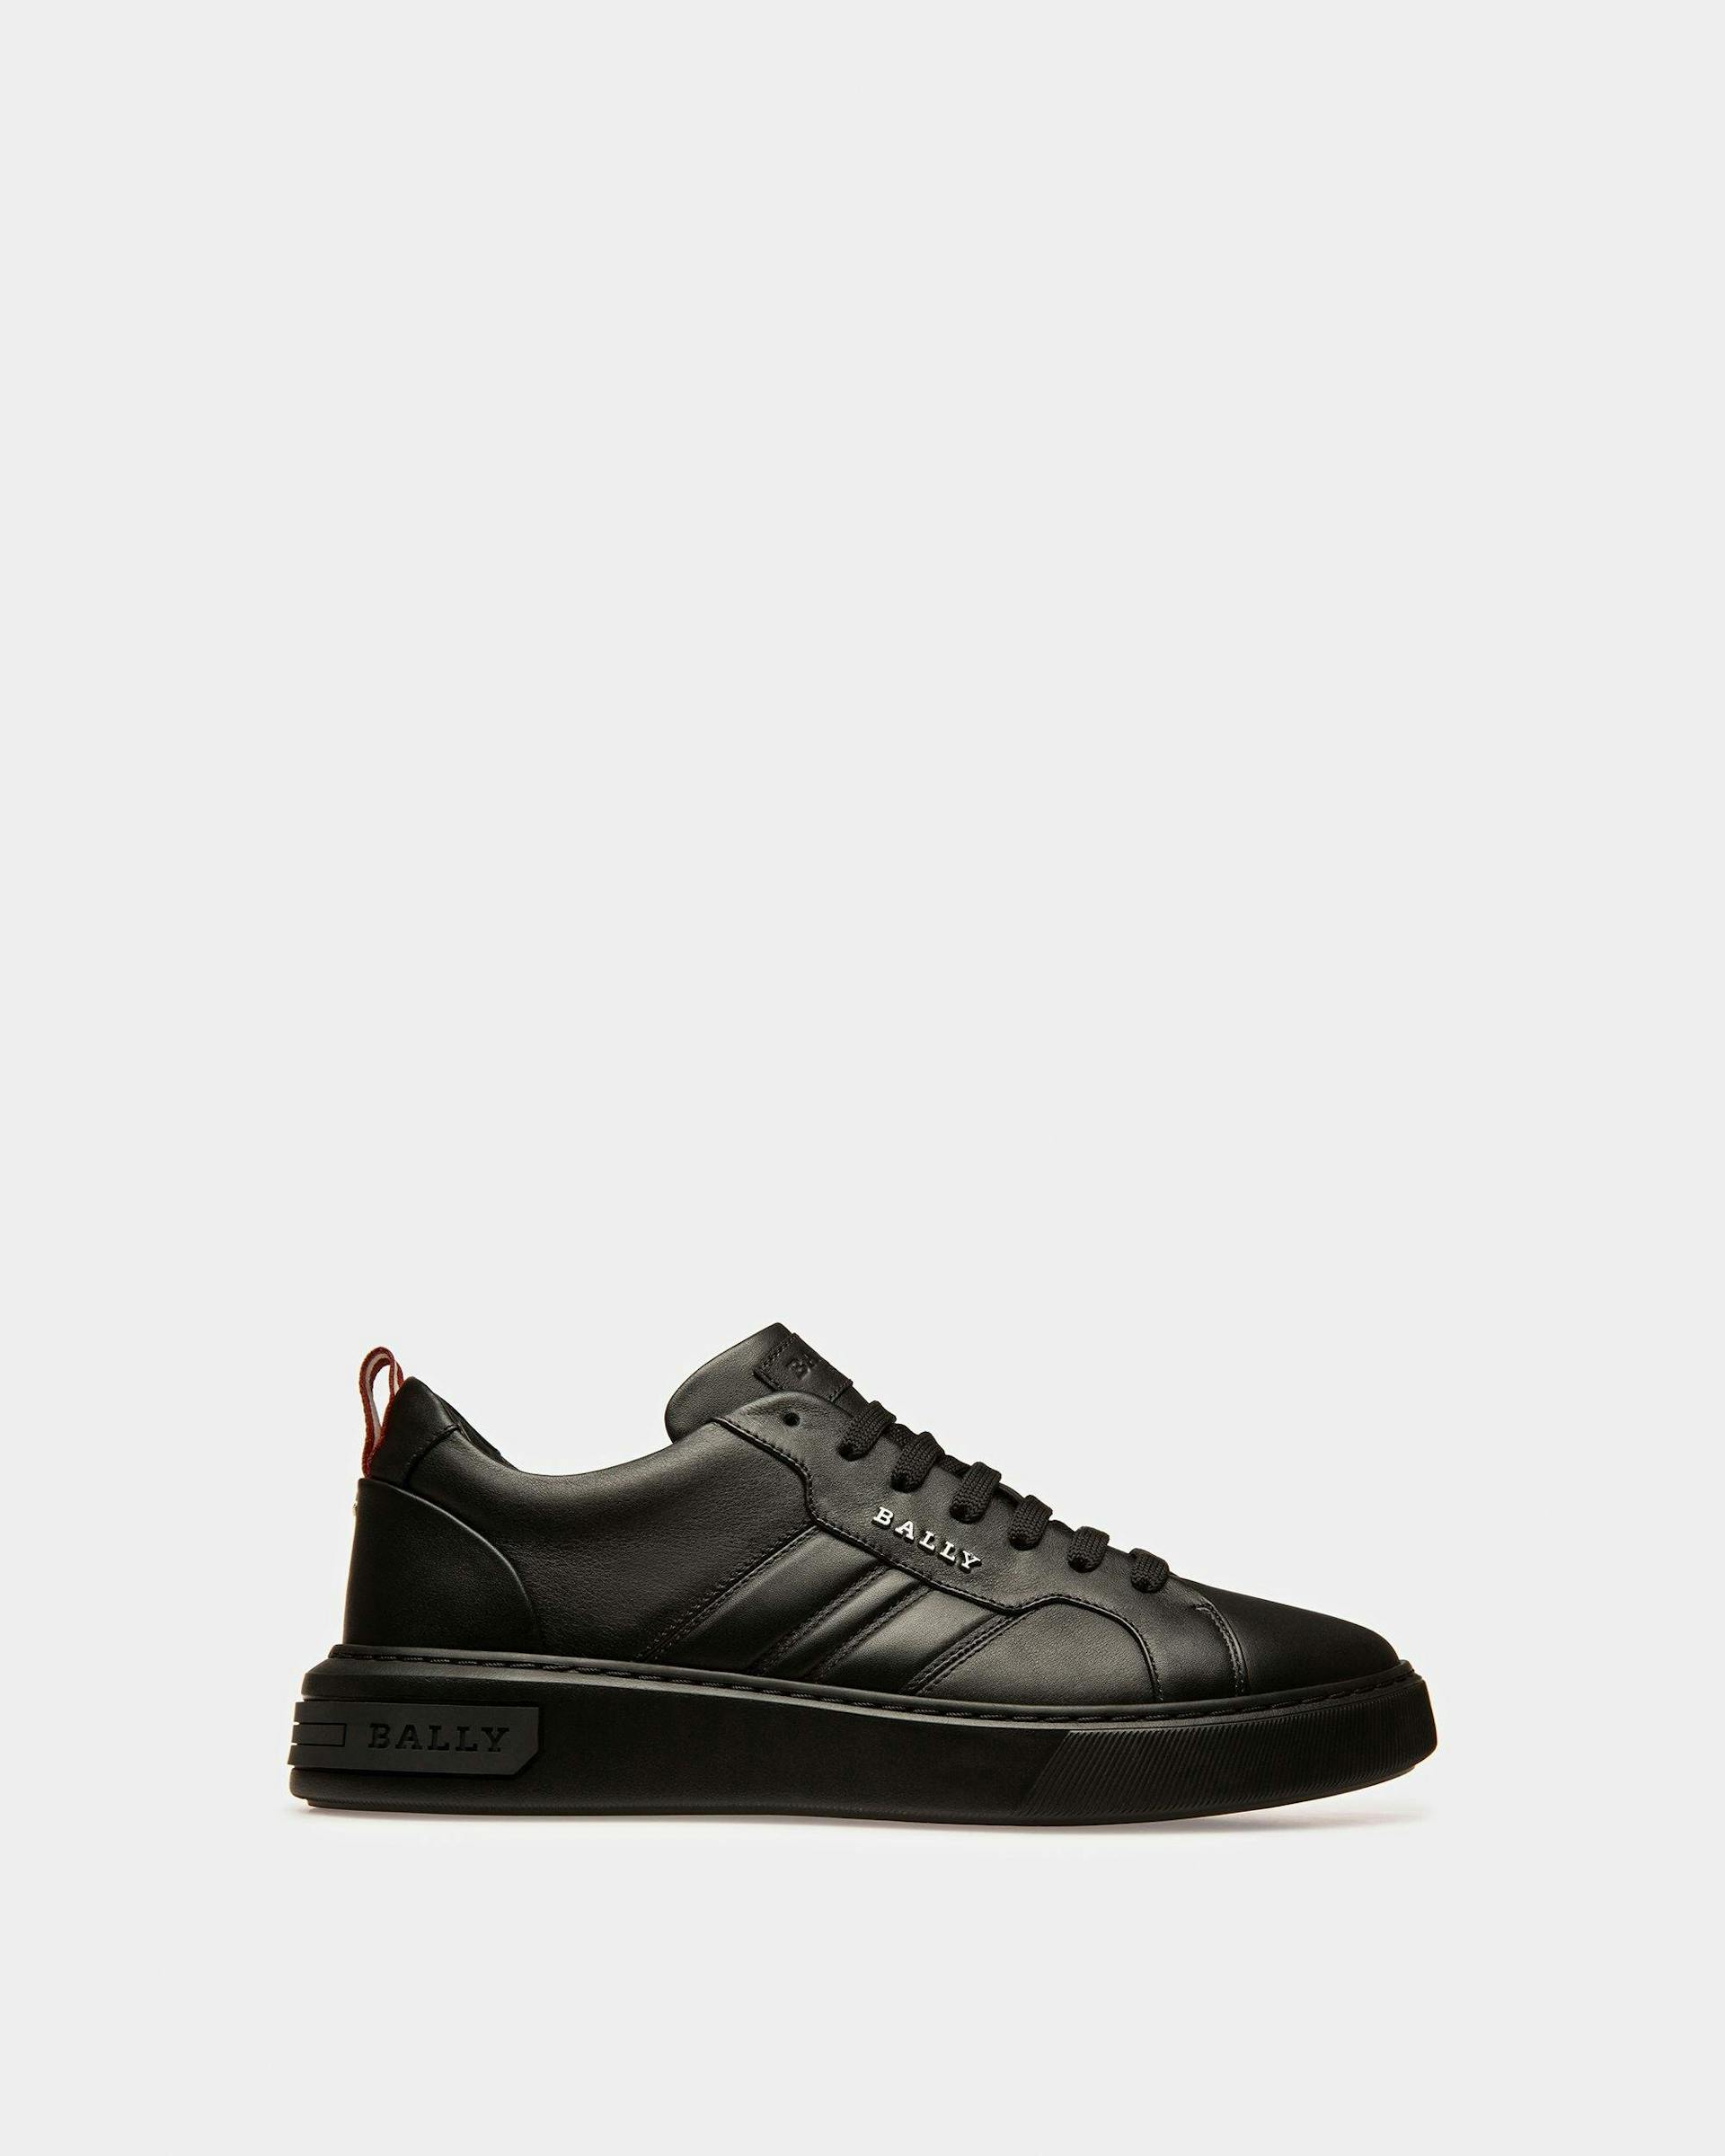 Maxim Leather Sneakers In Black - Men's - Bally - 01